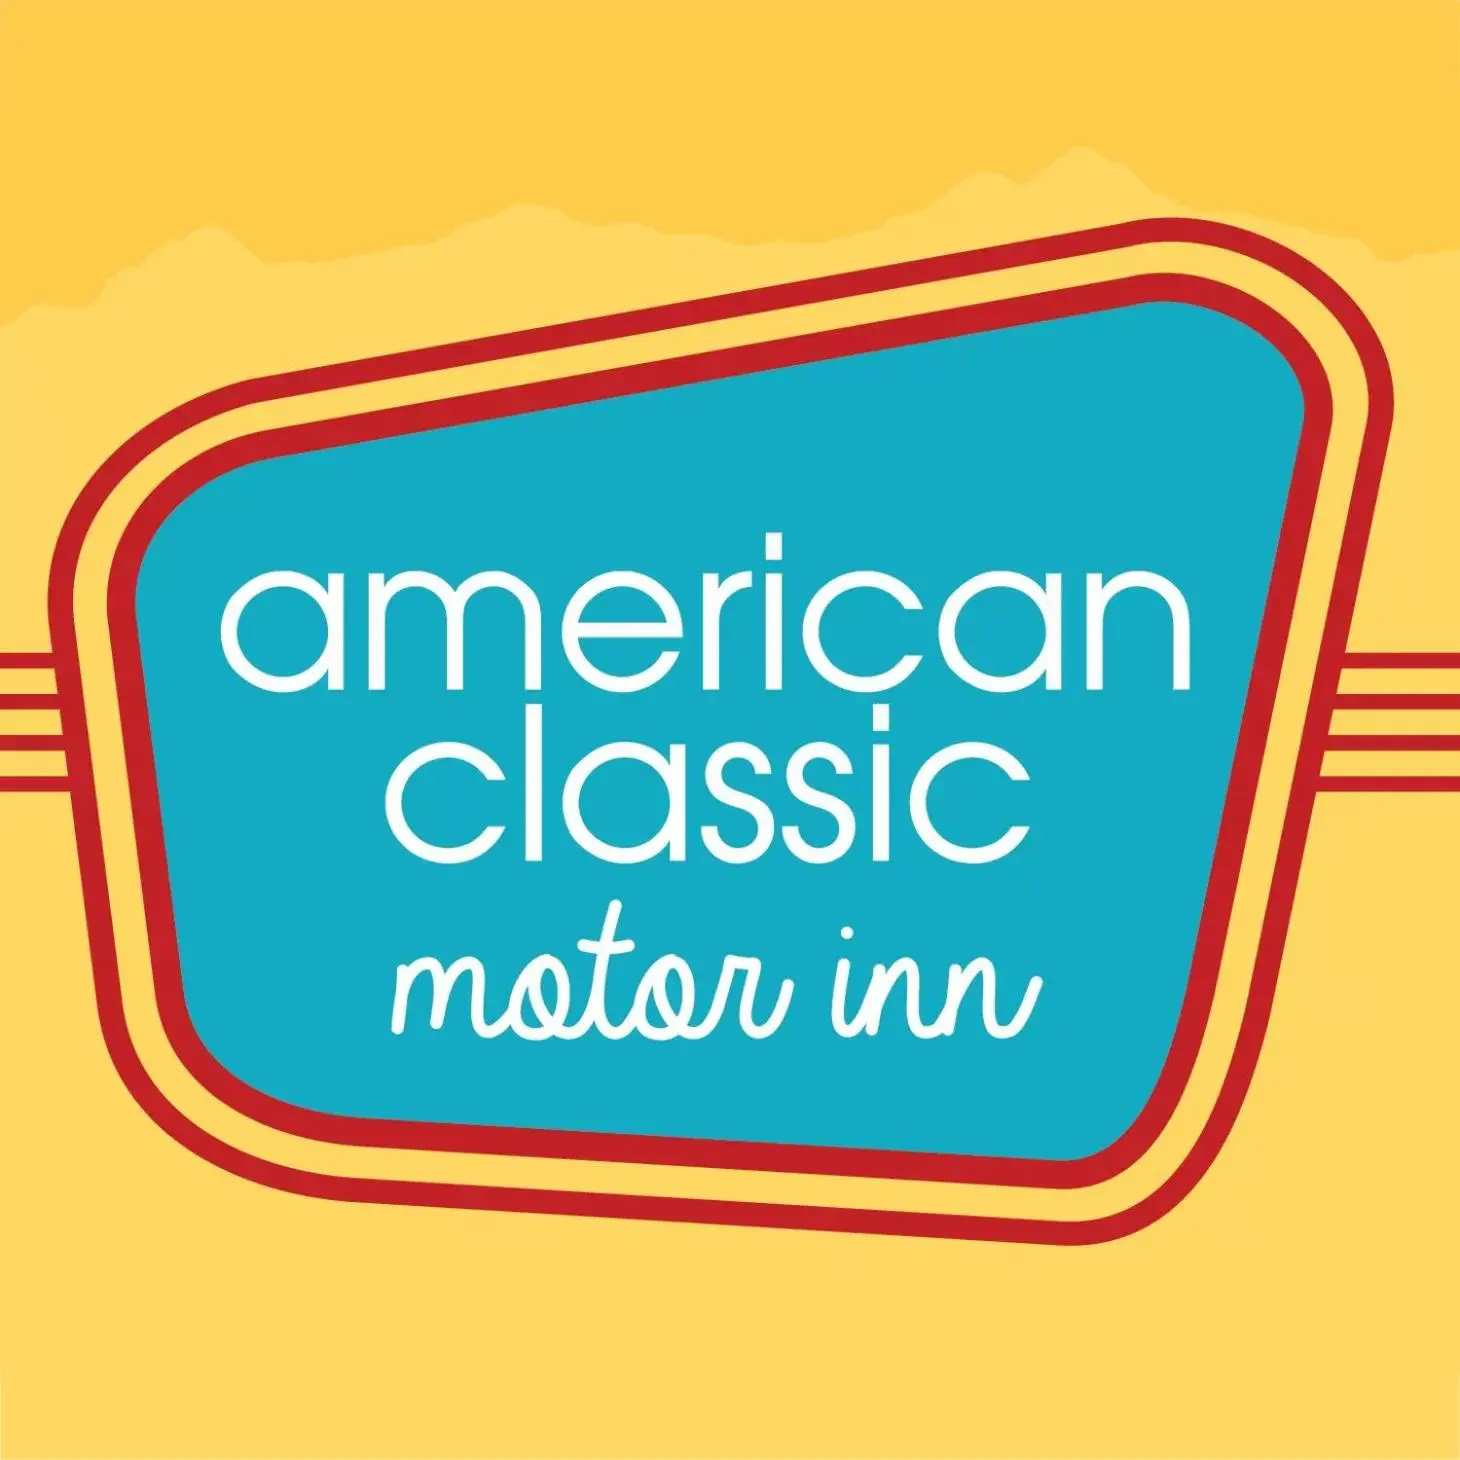 American Classic Inn